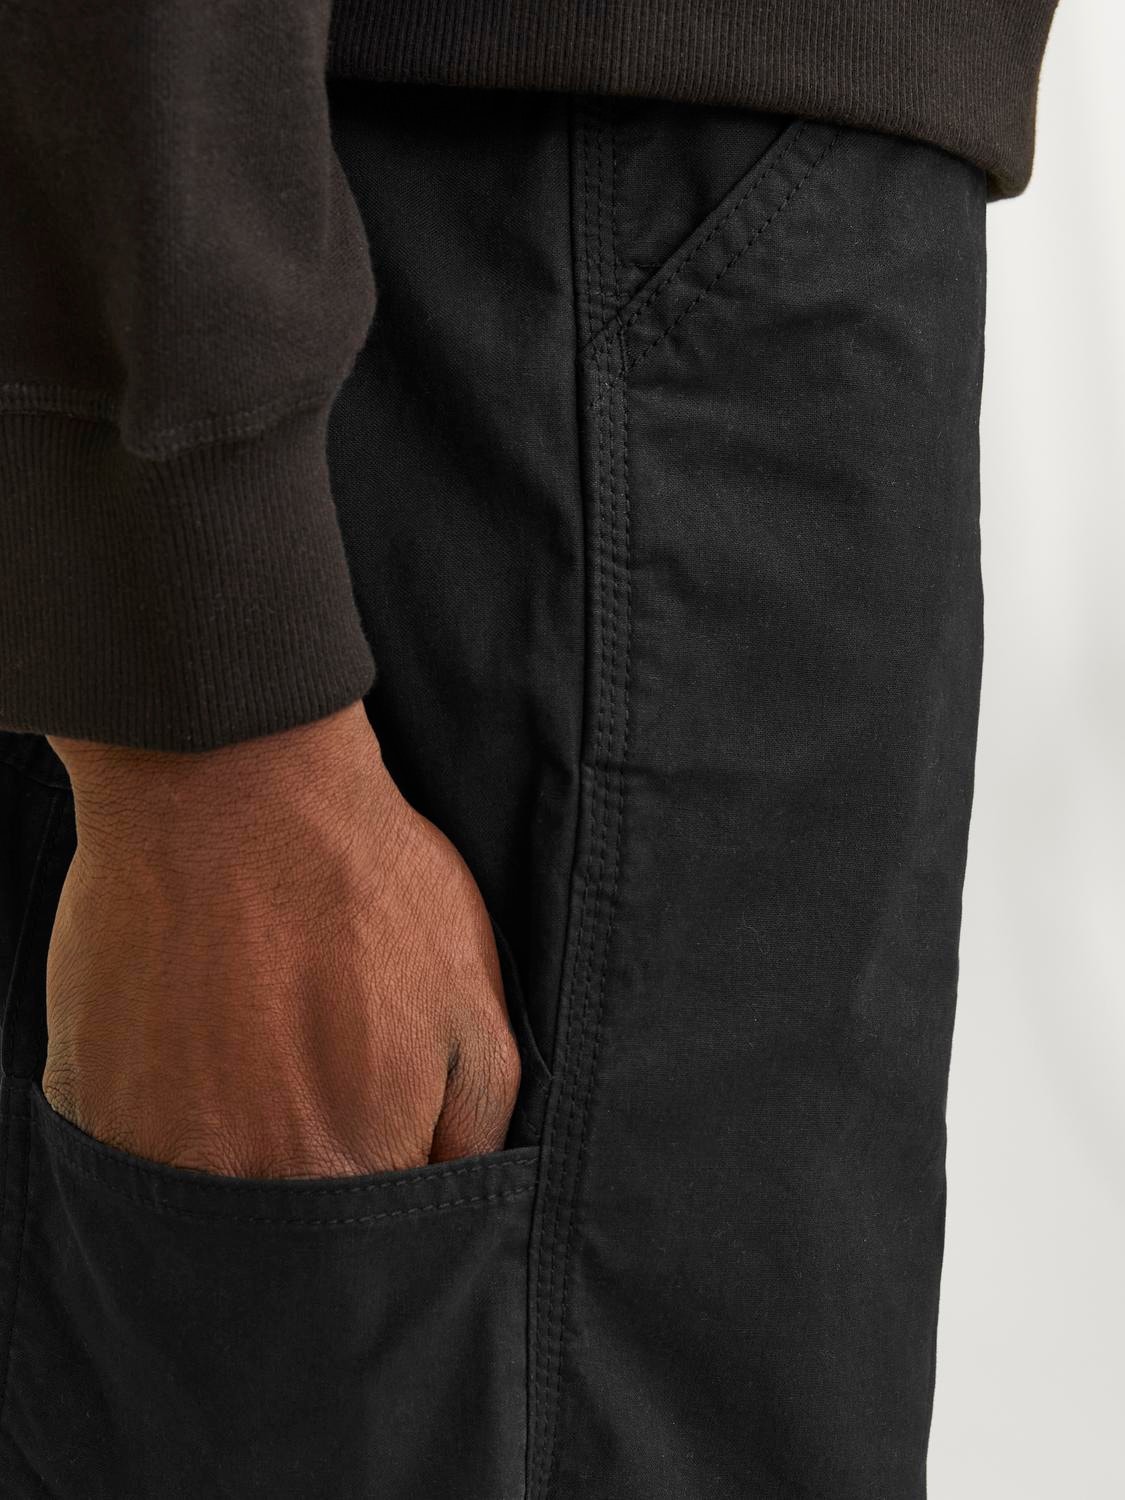 Jack & Jones Regular Fit 5-pocket shorts -Black - 12232118